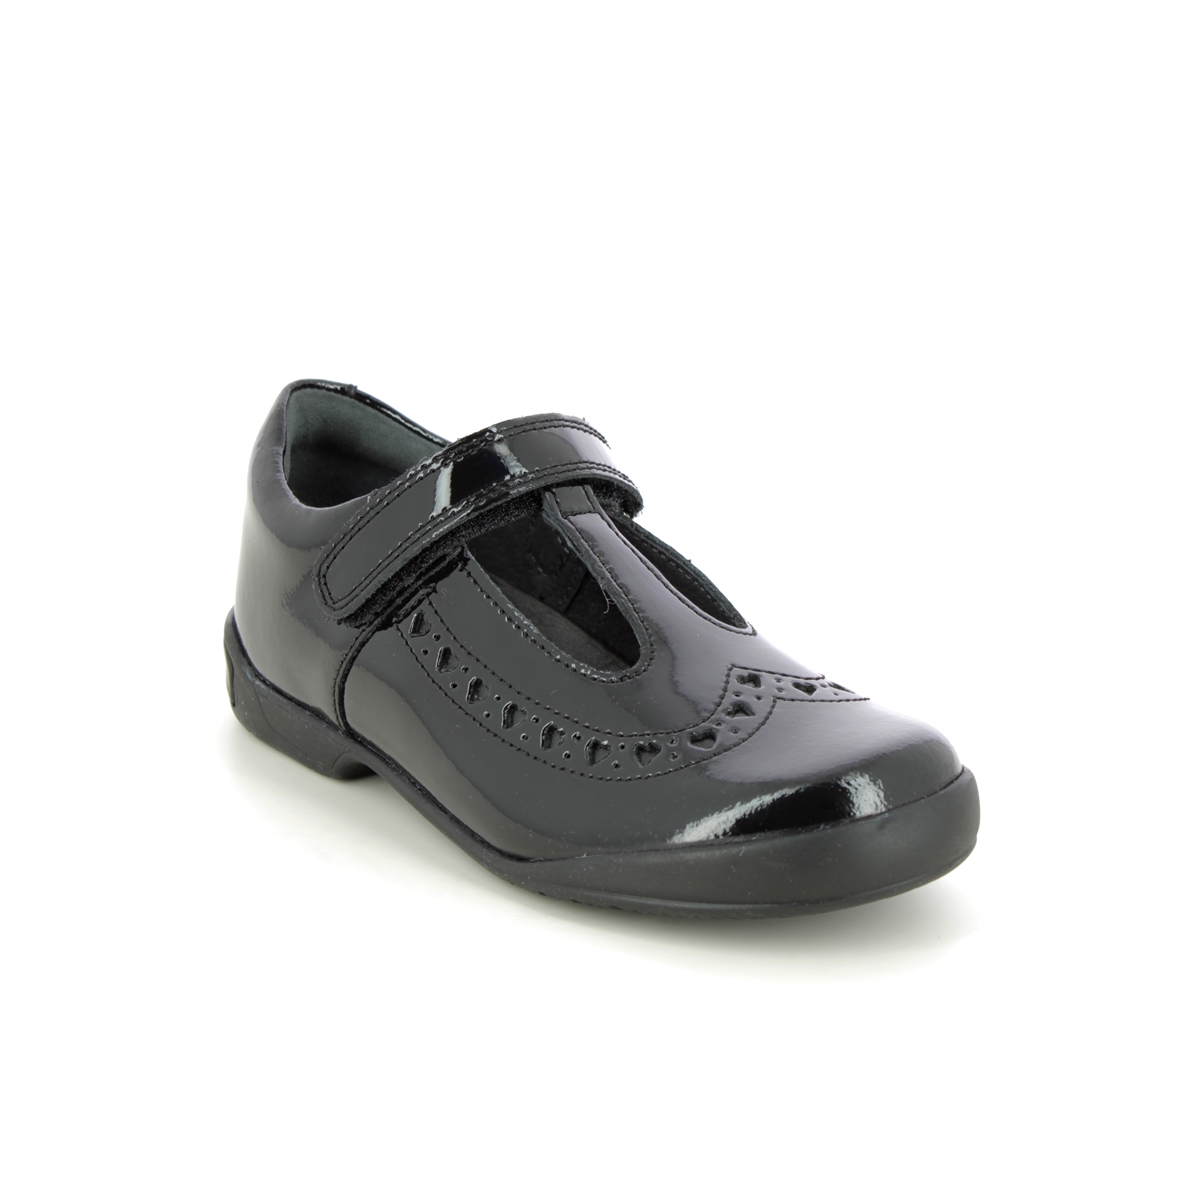 Start Rite - Leapfrog In Black Patent 2789-36F In Size 1.5 In Plain Black Patent For School Girls Shoes  In Black Patent For kids